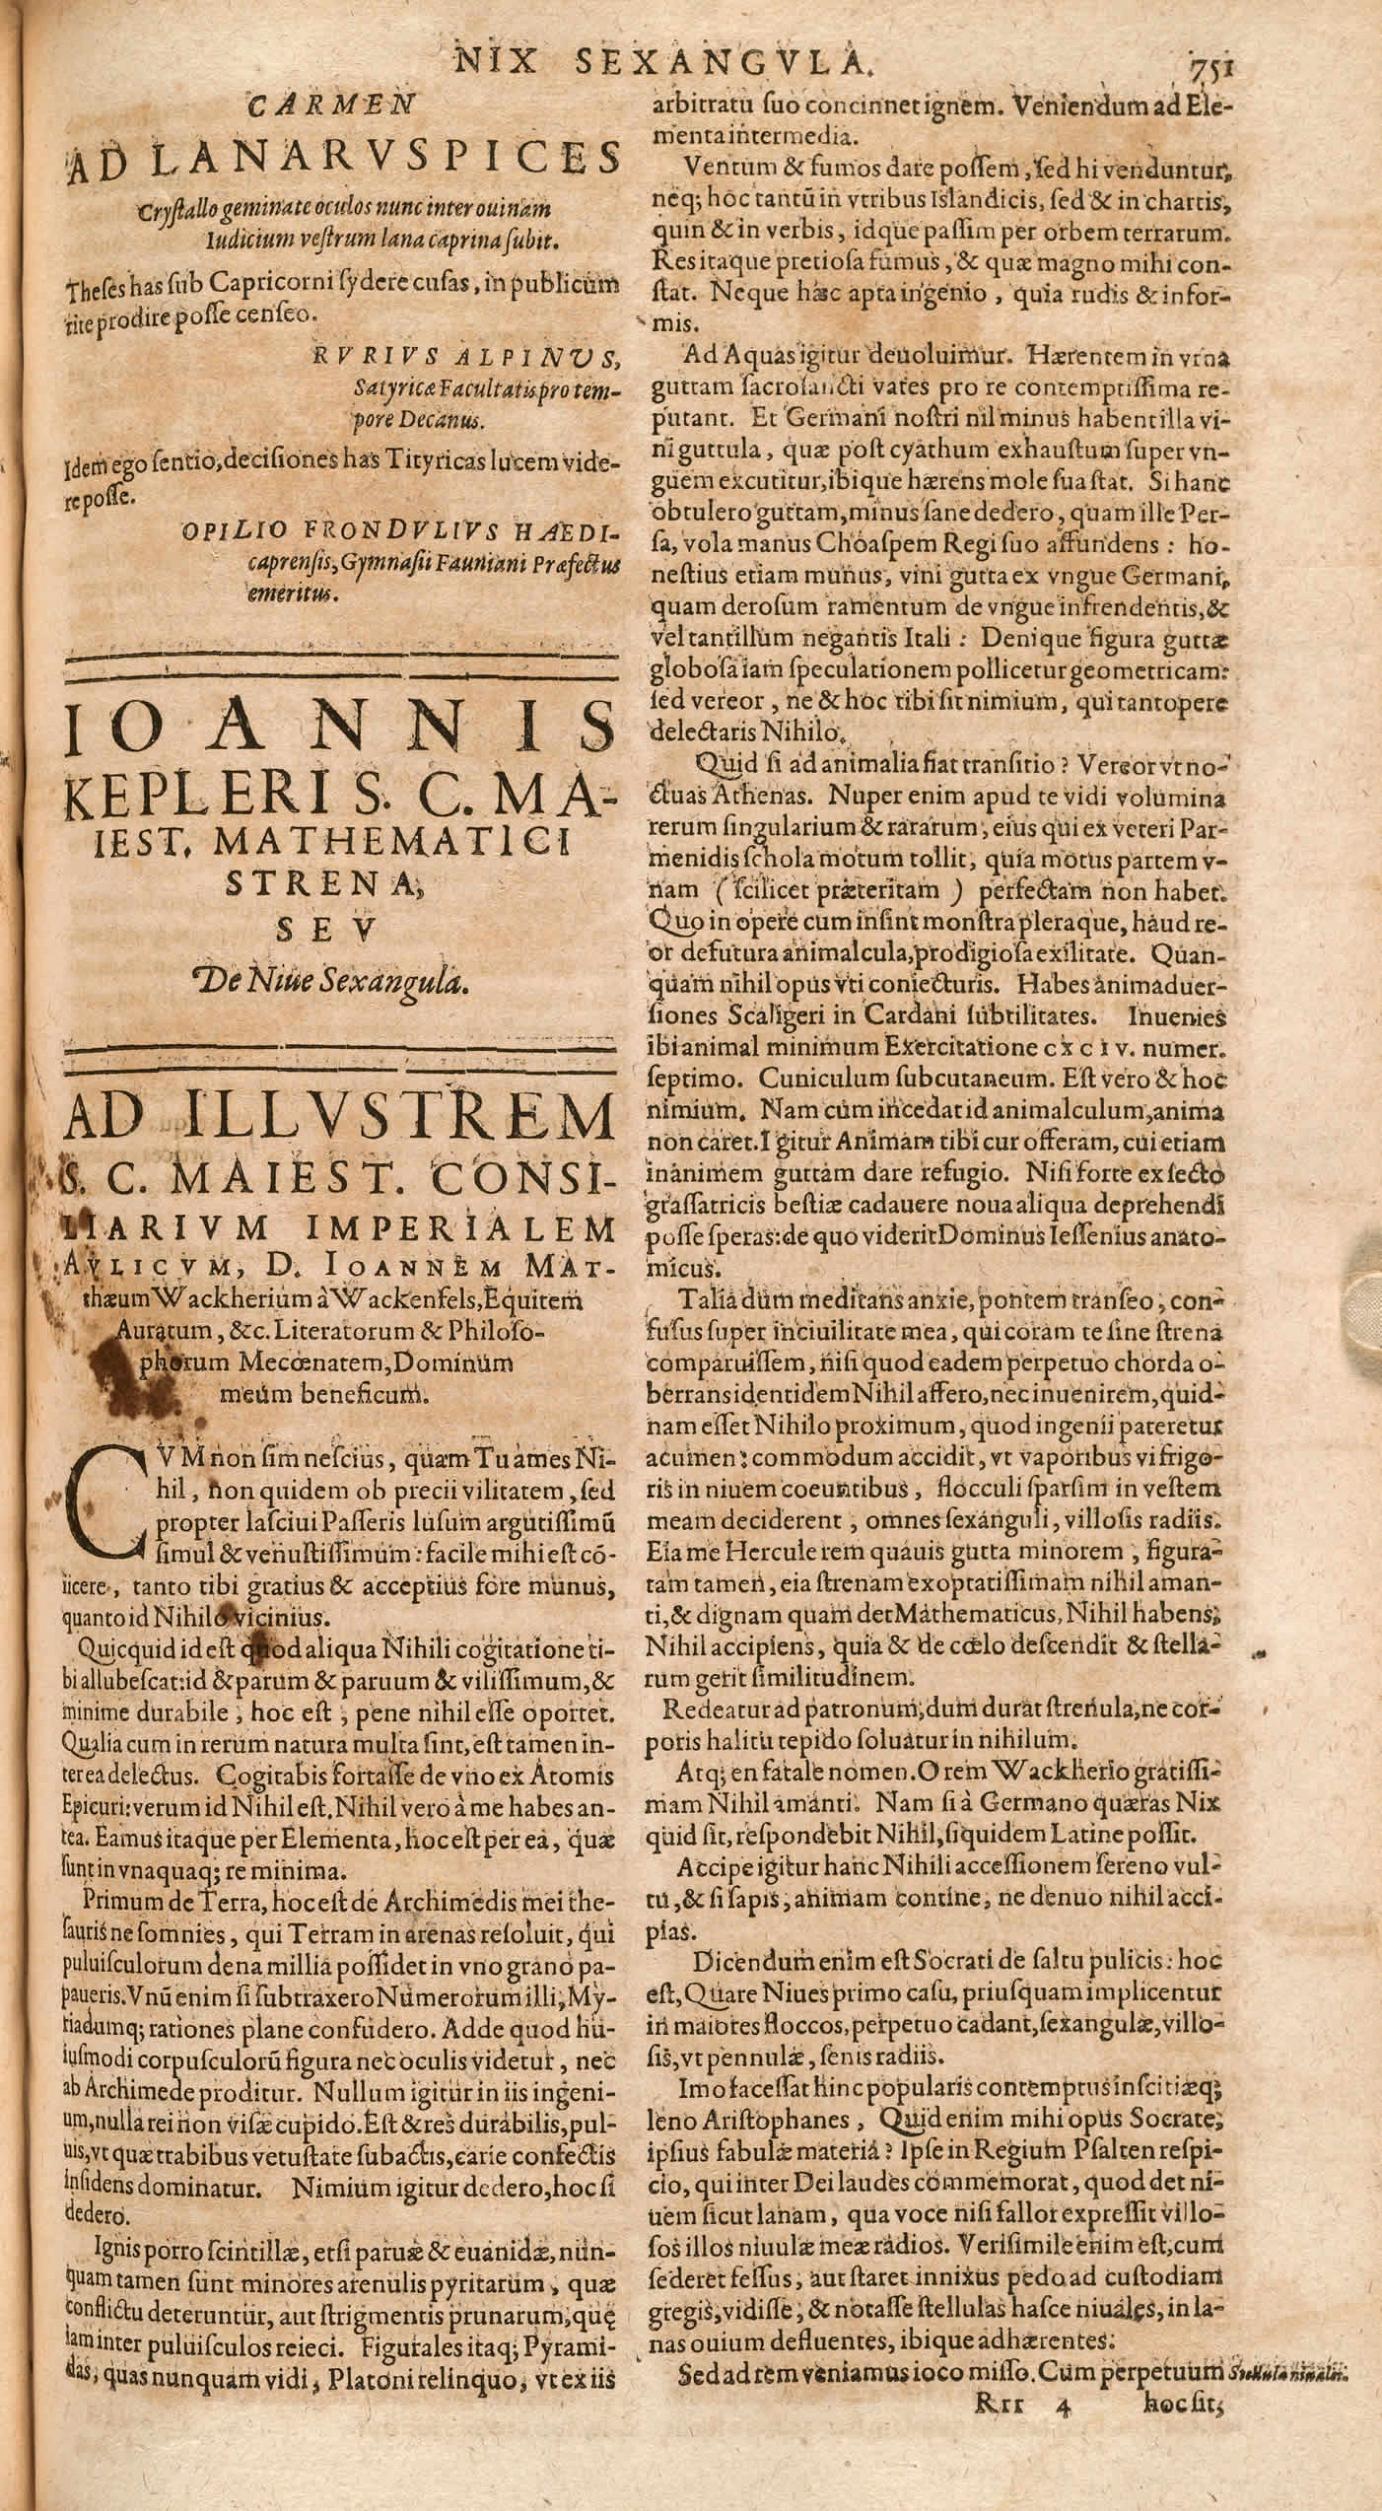 Image 2 from JOHANNES KEPLER (1571 - 1630). "Strena seu de Nive Sexangula" in <em>Amphitheatrum Sapientiae Socraticae Joco-seriae</em>, Caspar Dornau, ed. Hanau: Daniel and David Aubrii & Clementis Schleichius, 1619.